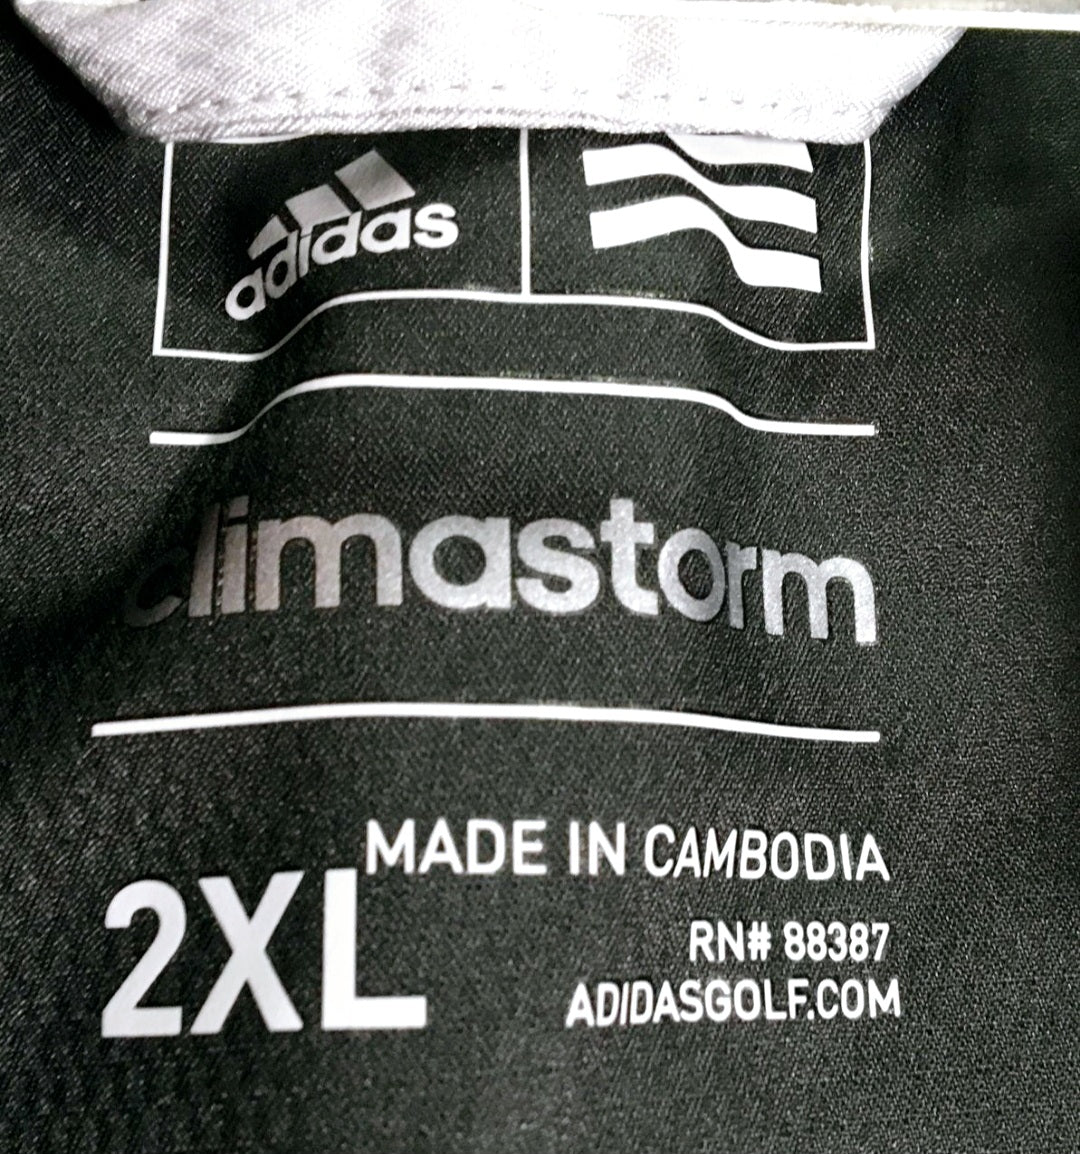 Adidas Climastorm *Grey Men's Windbreaker Golfer Adult Jacket (size 2XL)